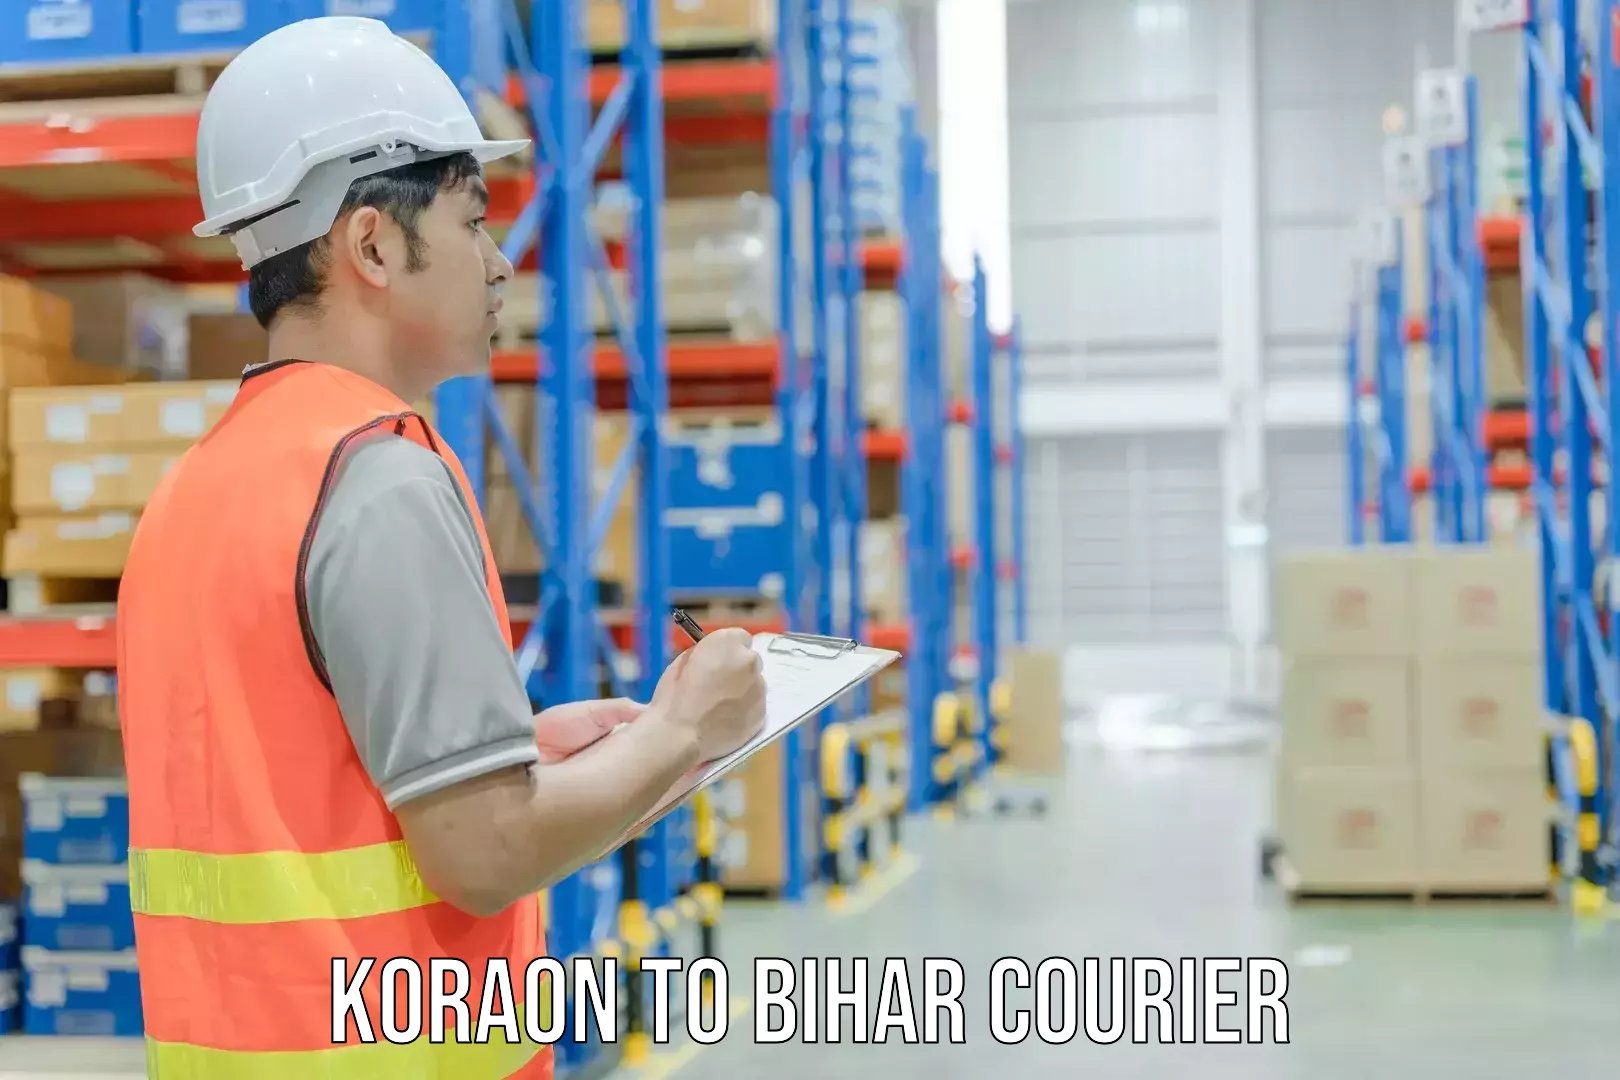 Express delivery capabilities Koraon to Bihar